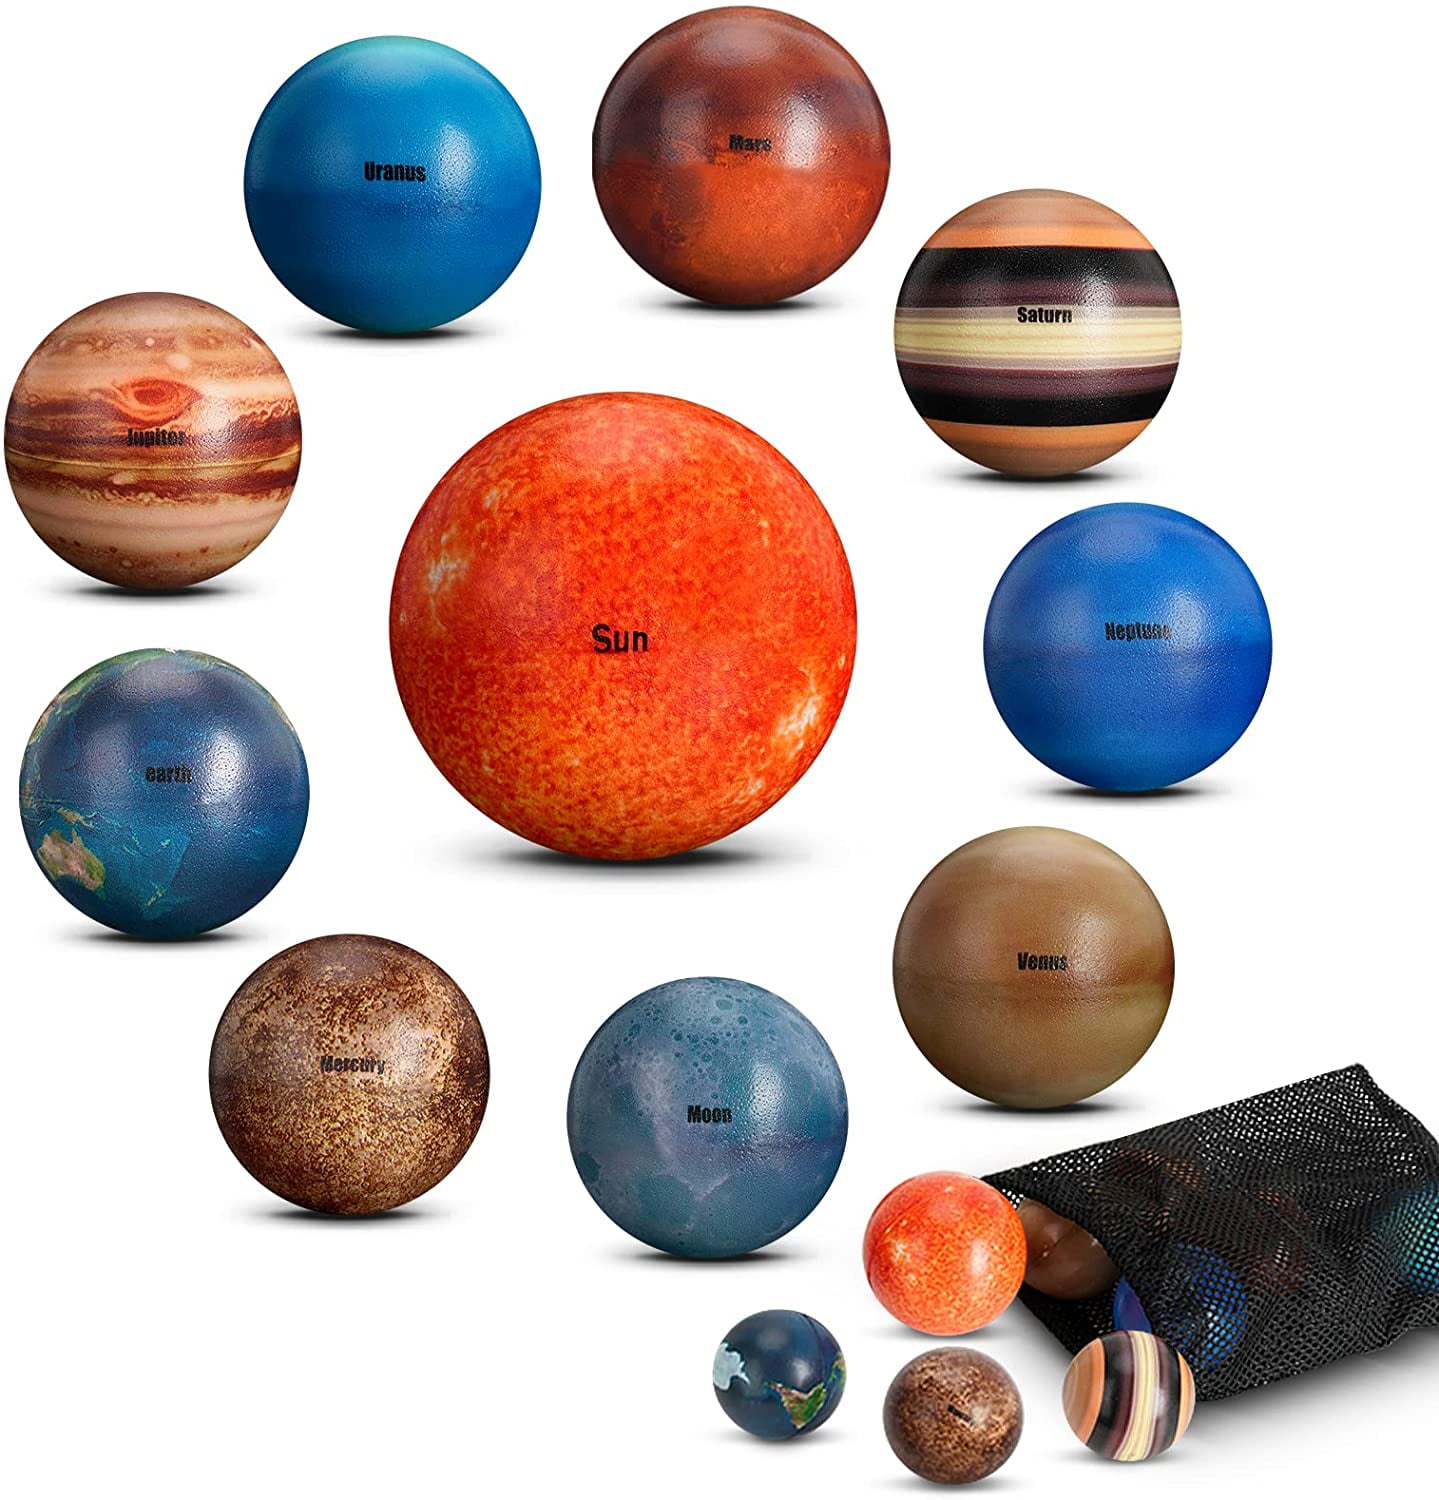 Solar System Planet Balls Bouncing Ball Color Print Sensory Toy